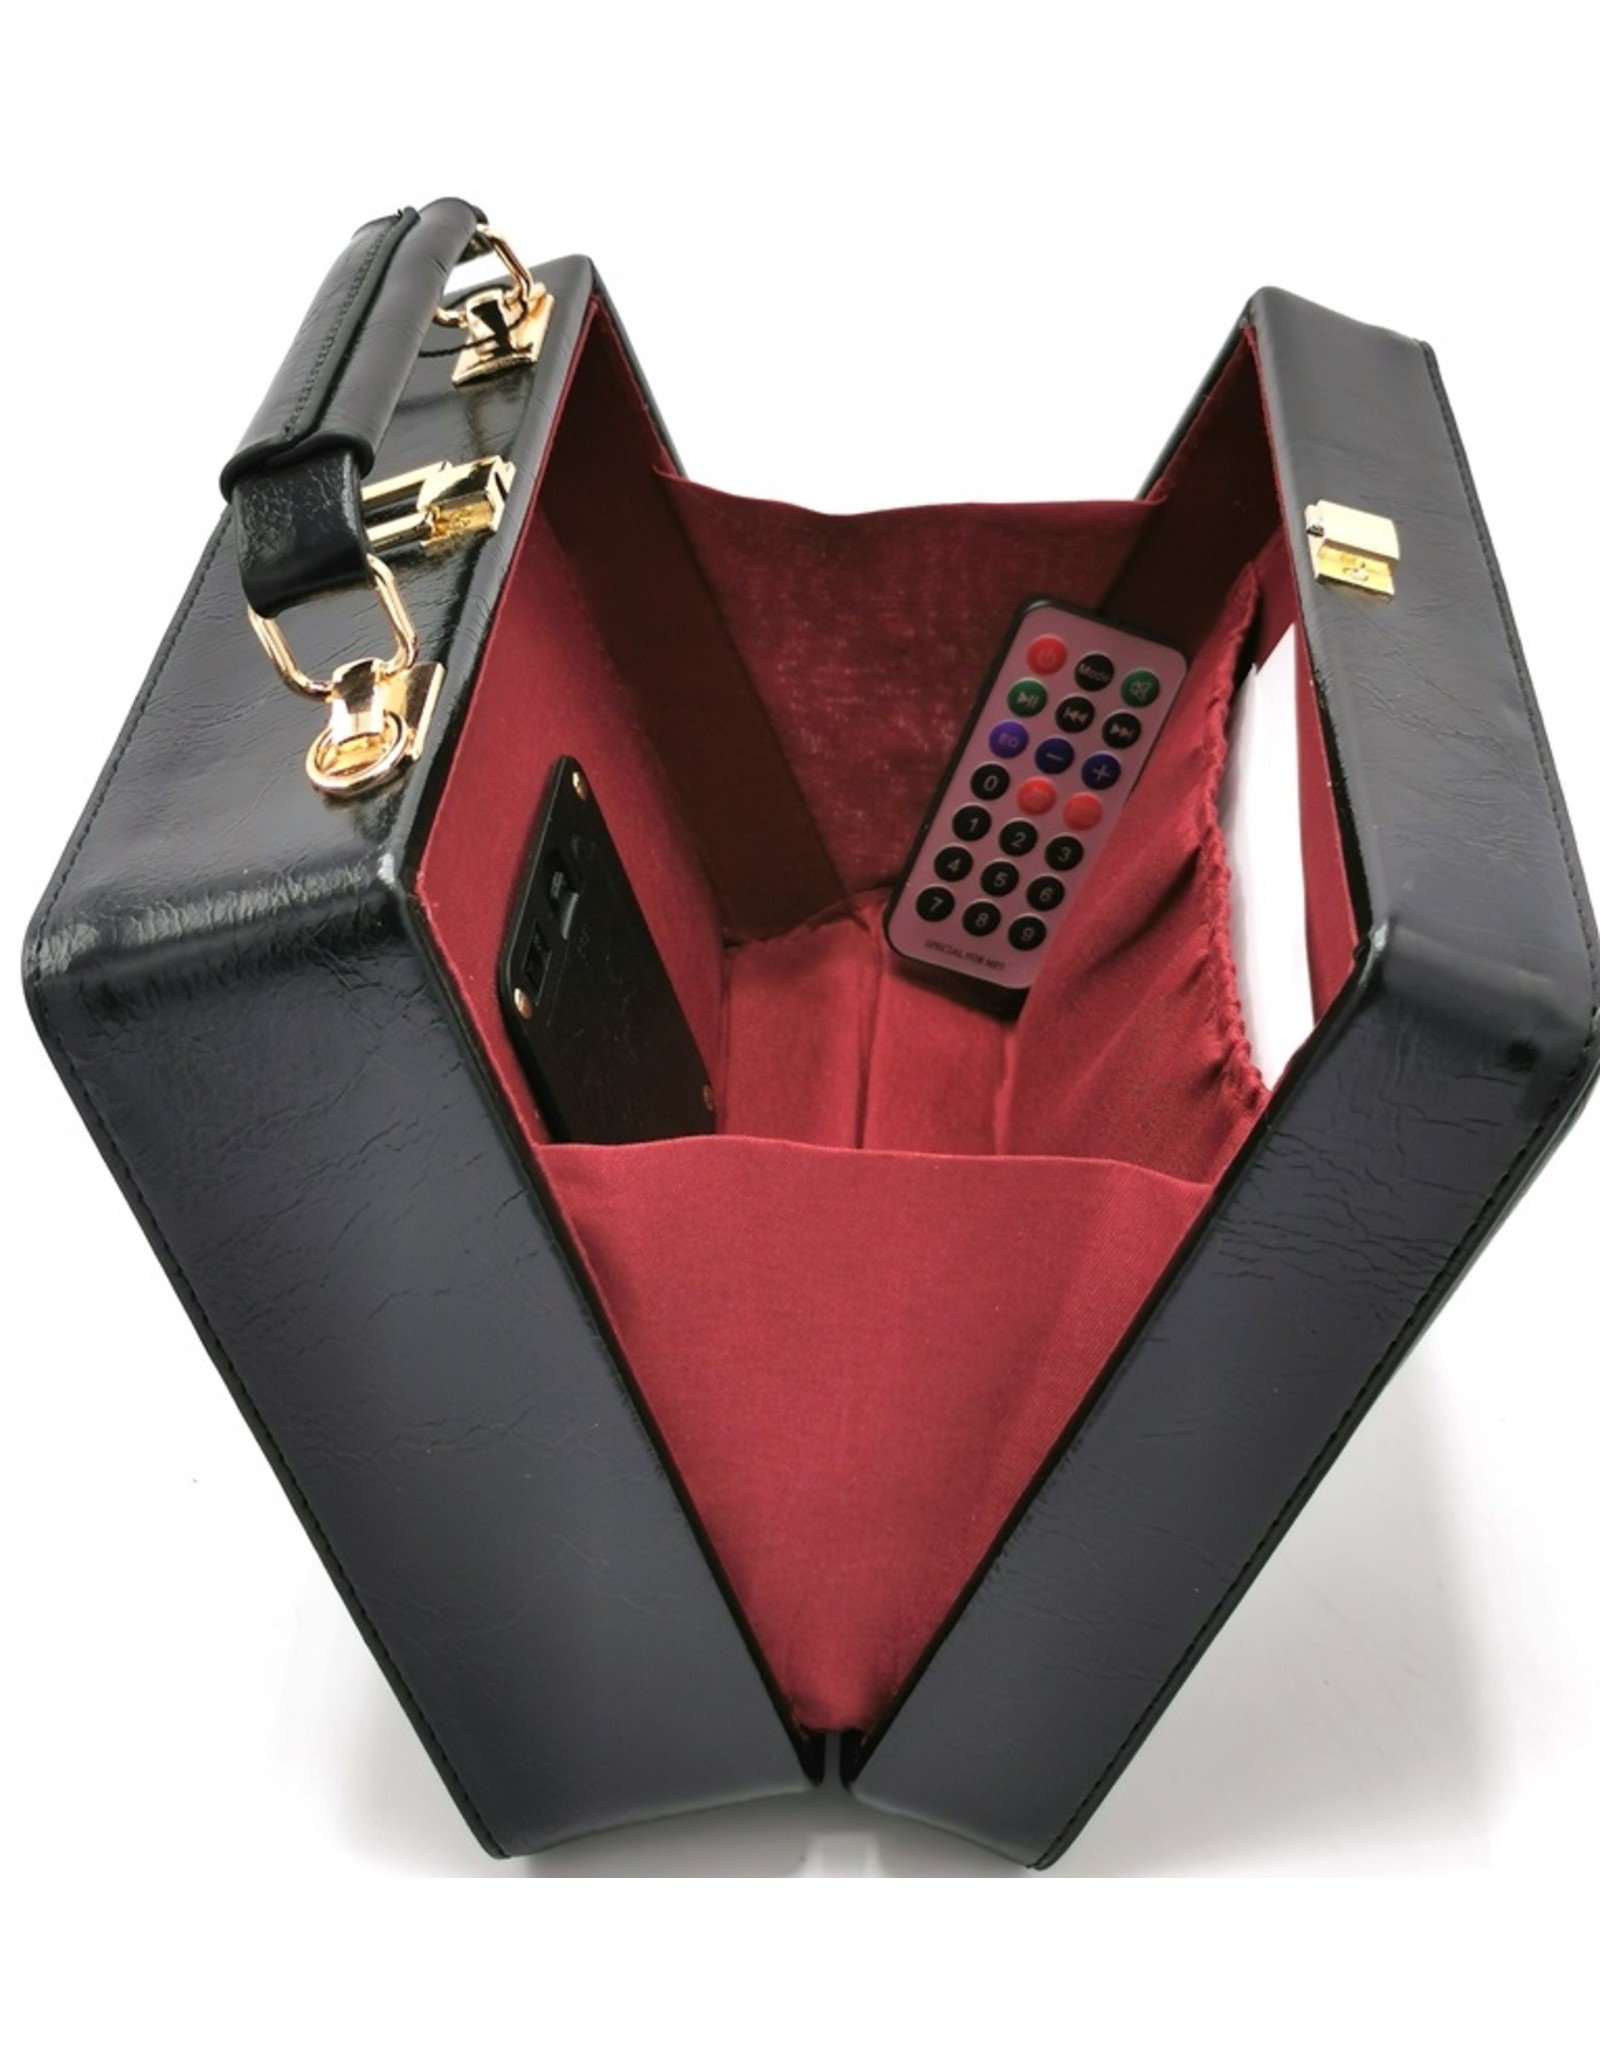 Magic Bags Fantasy bags - Retro Radio bag with Real Radio and Bluetooth black